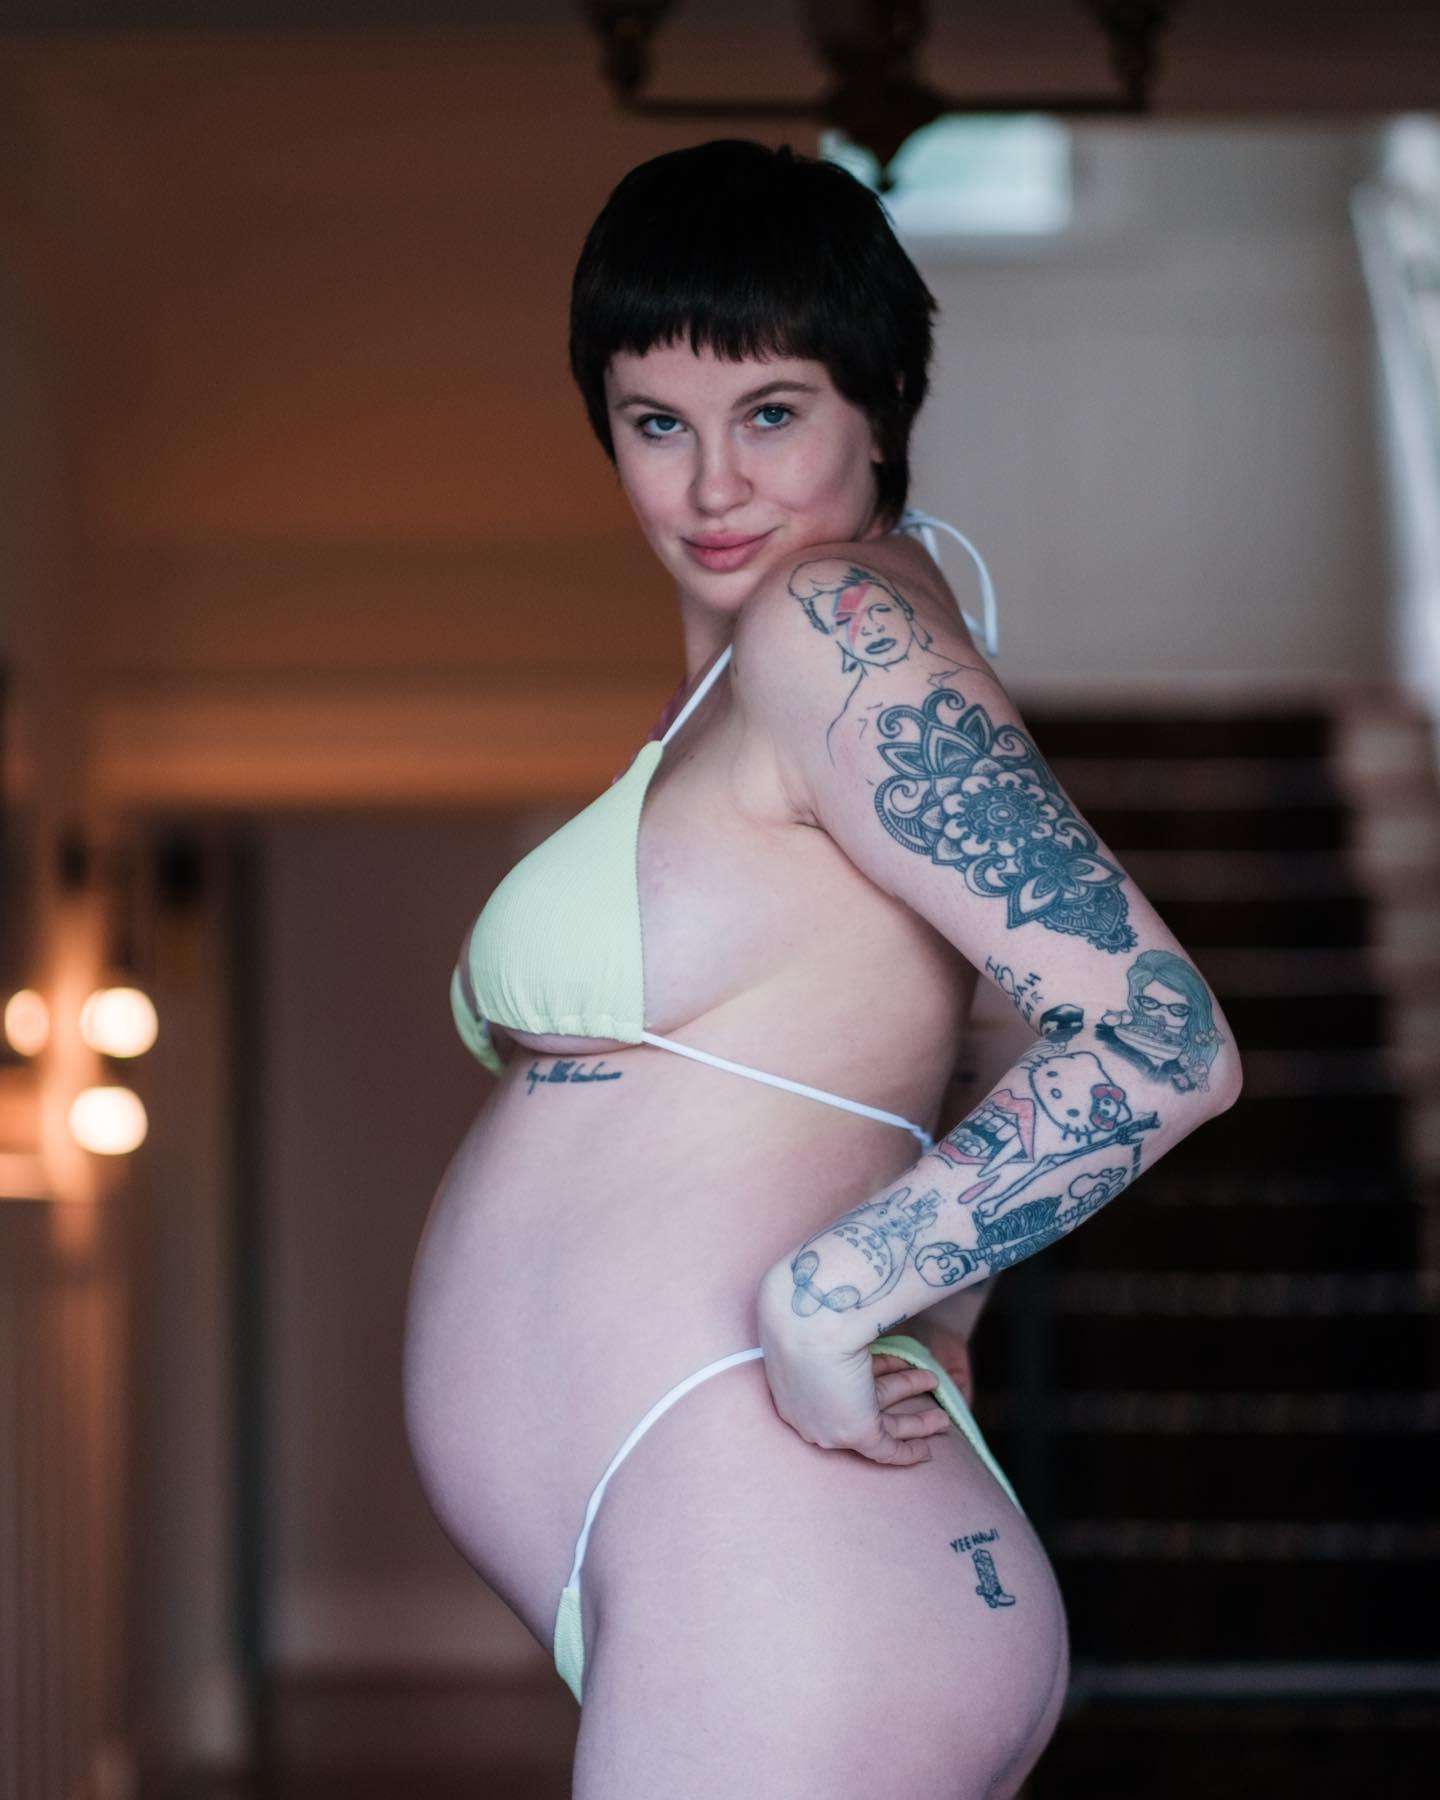 Ireland Baldwin marks the 6 month mark of her first pregnancy posing in a green bikini